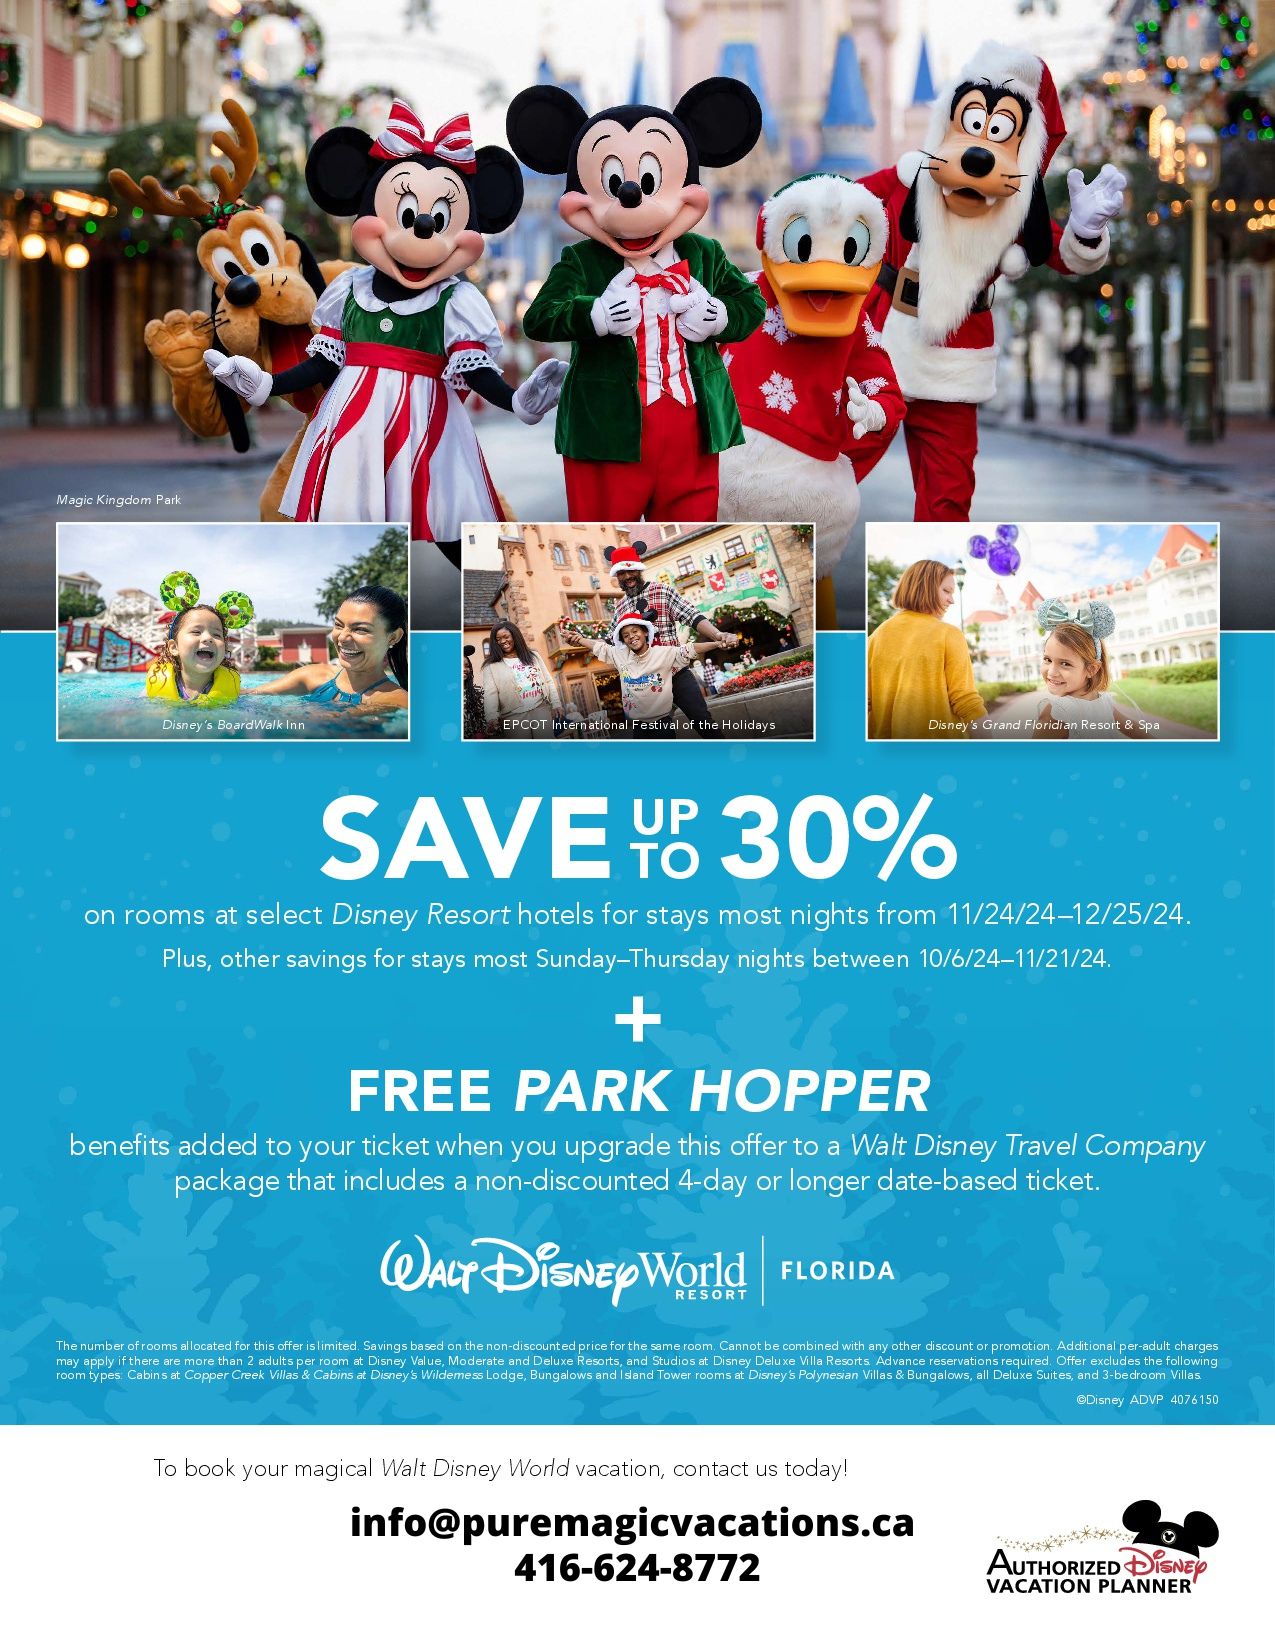 Walt Disney World: Save up to 30% + FREE Park Hopper